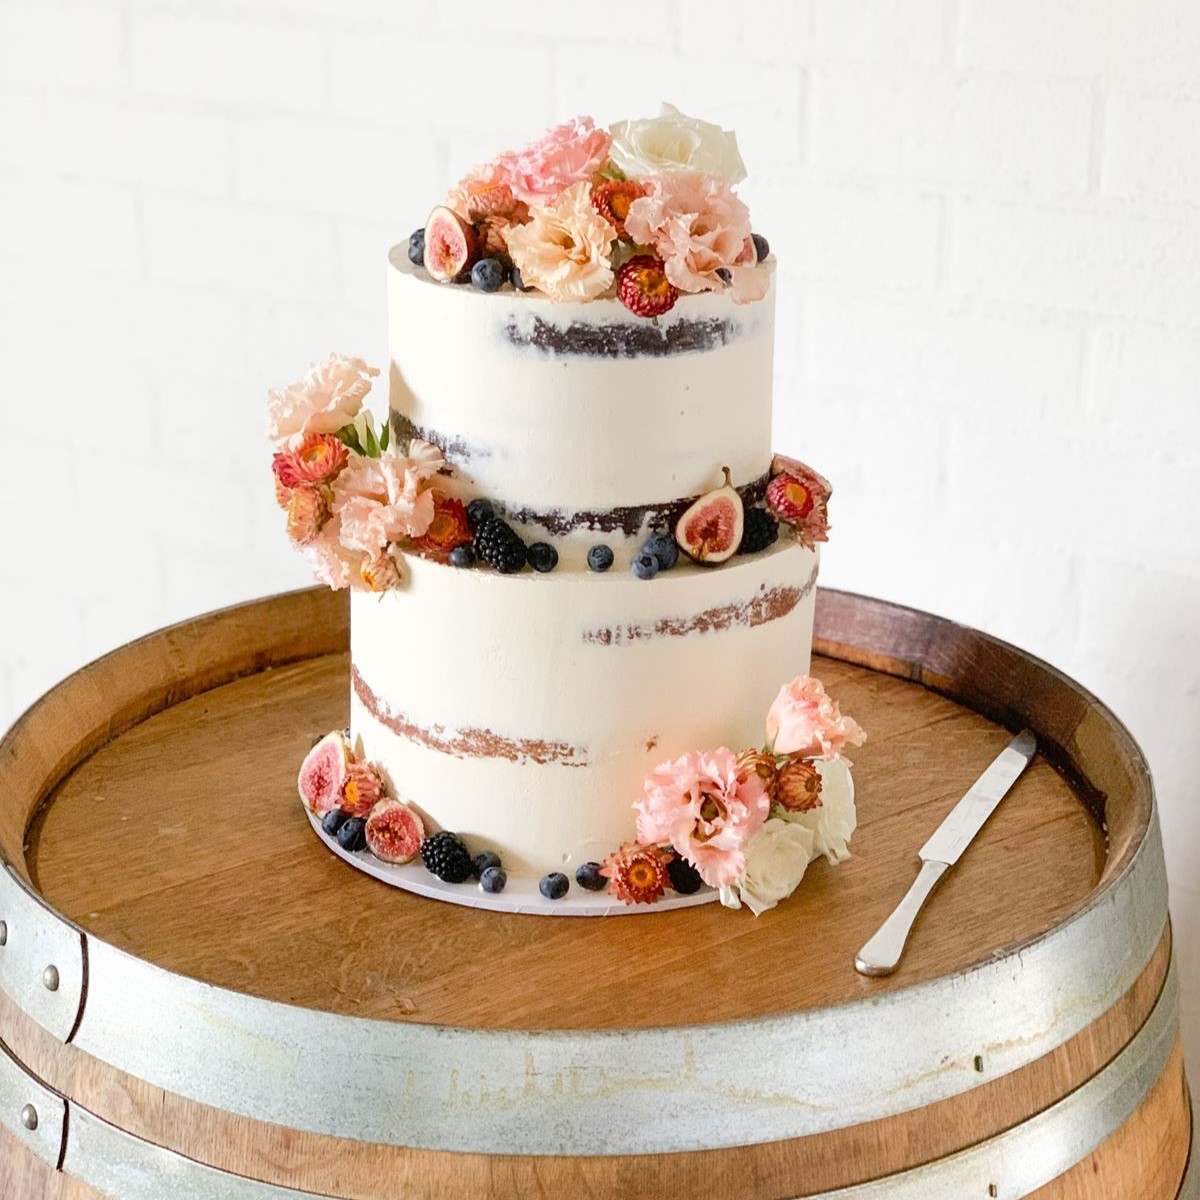 Popular wedding cake trends